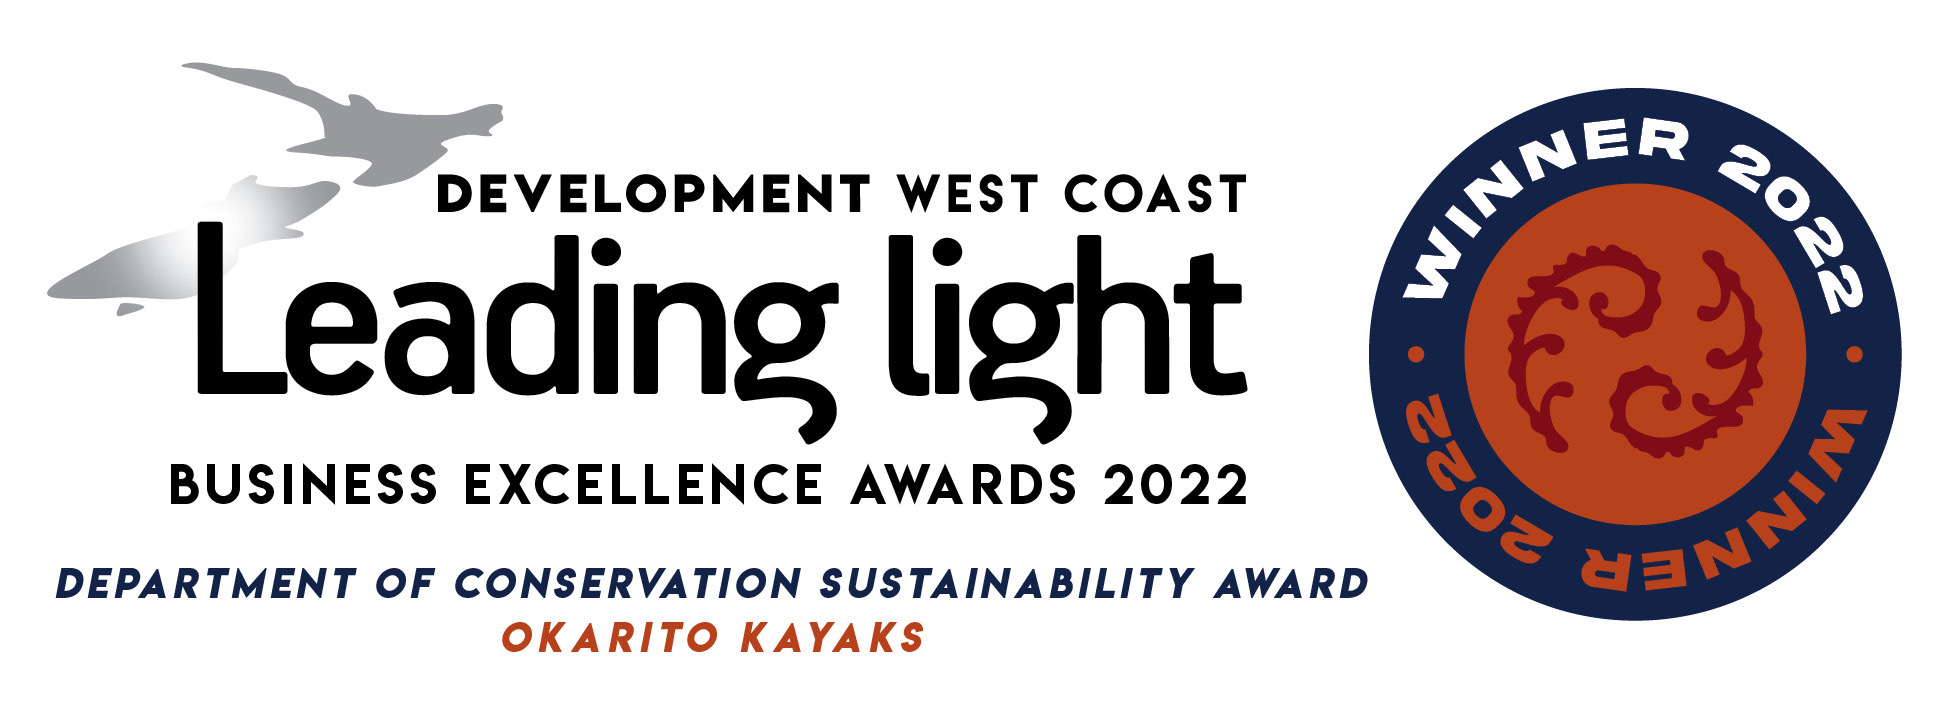 Sustainability Award winners Okarito Kayaks